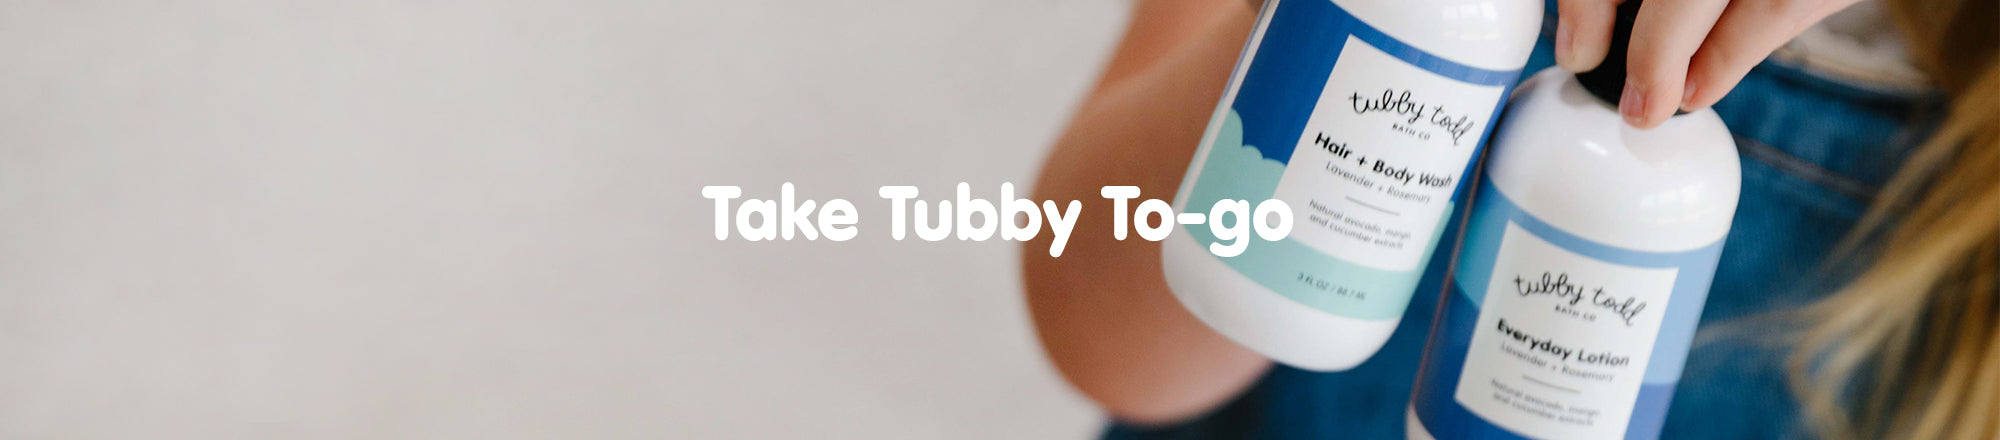 tubby todd travel kit